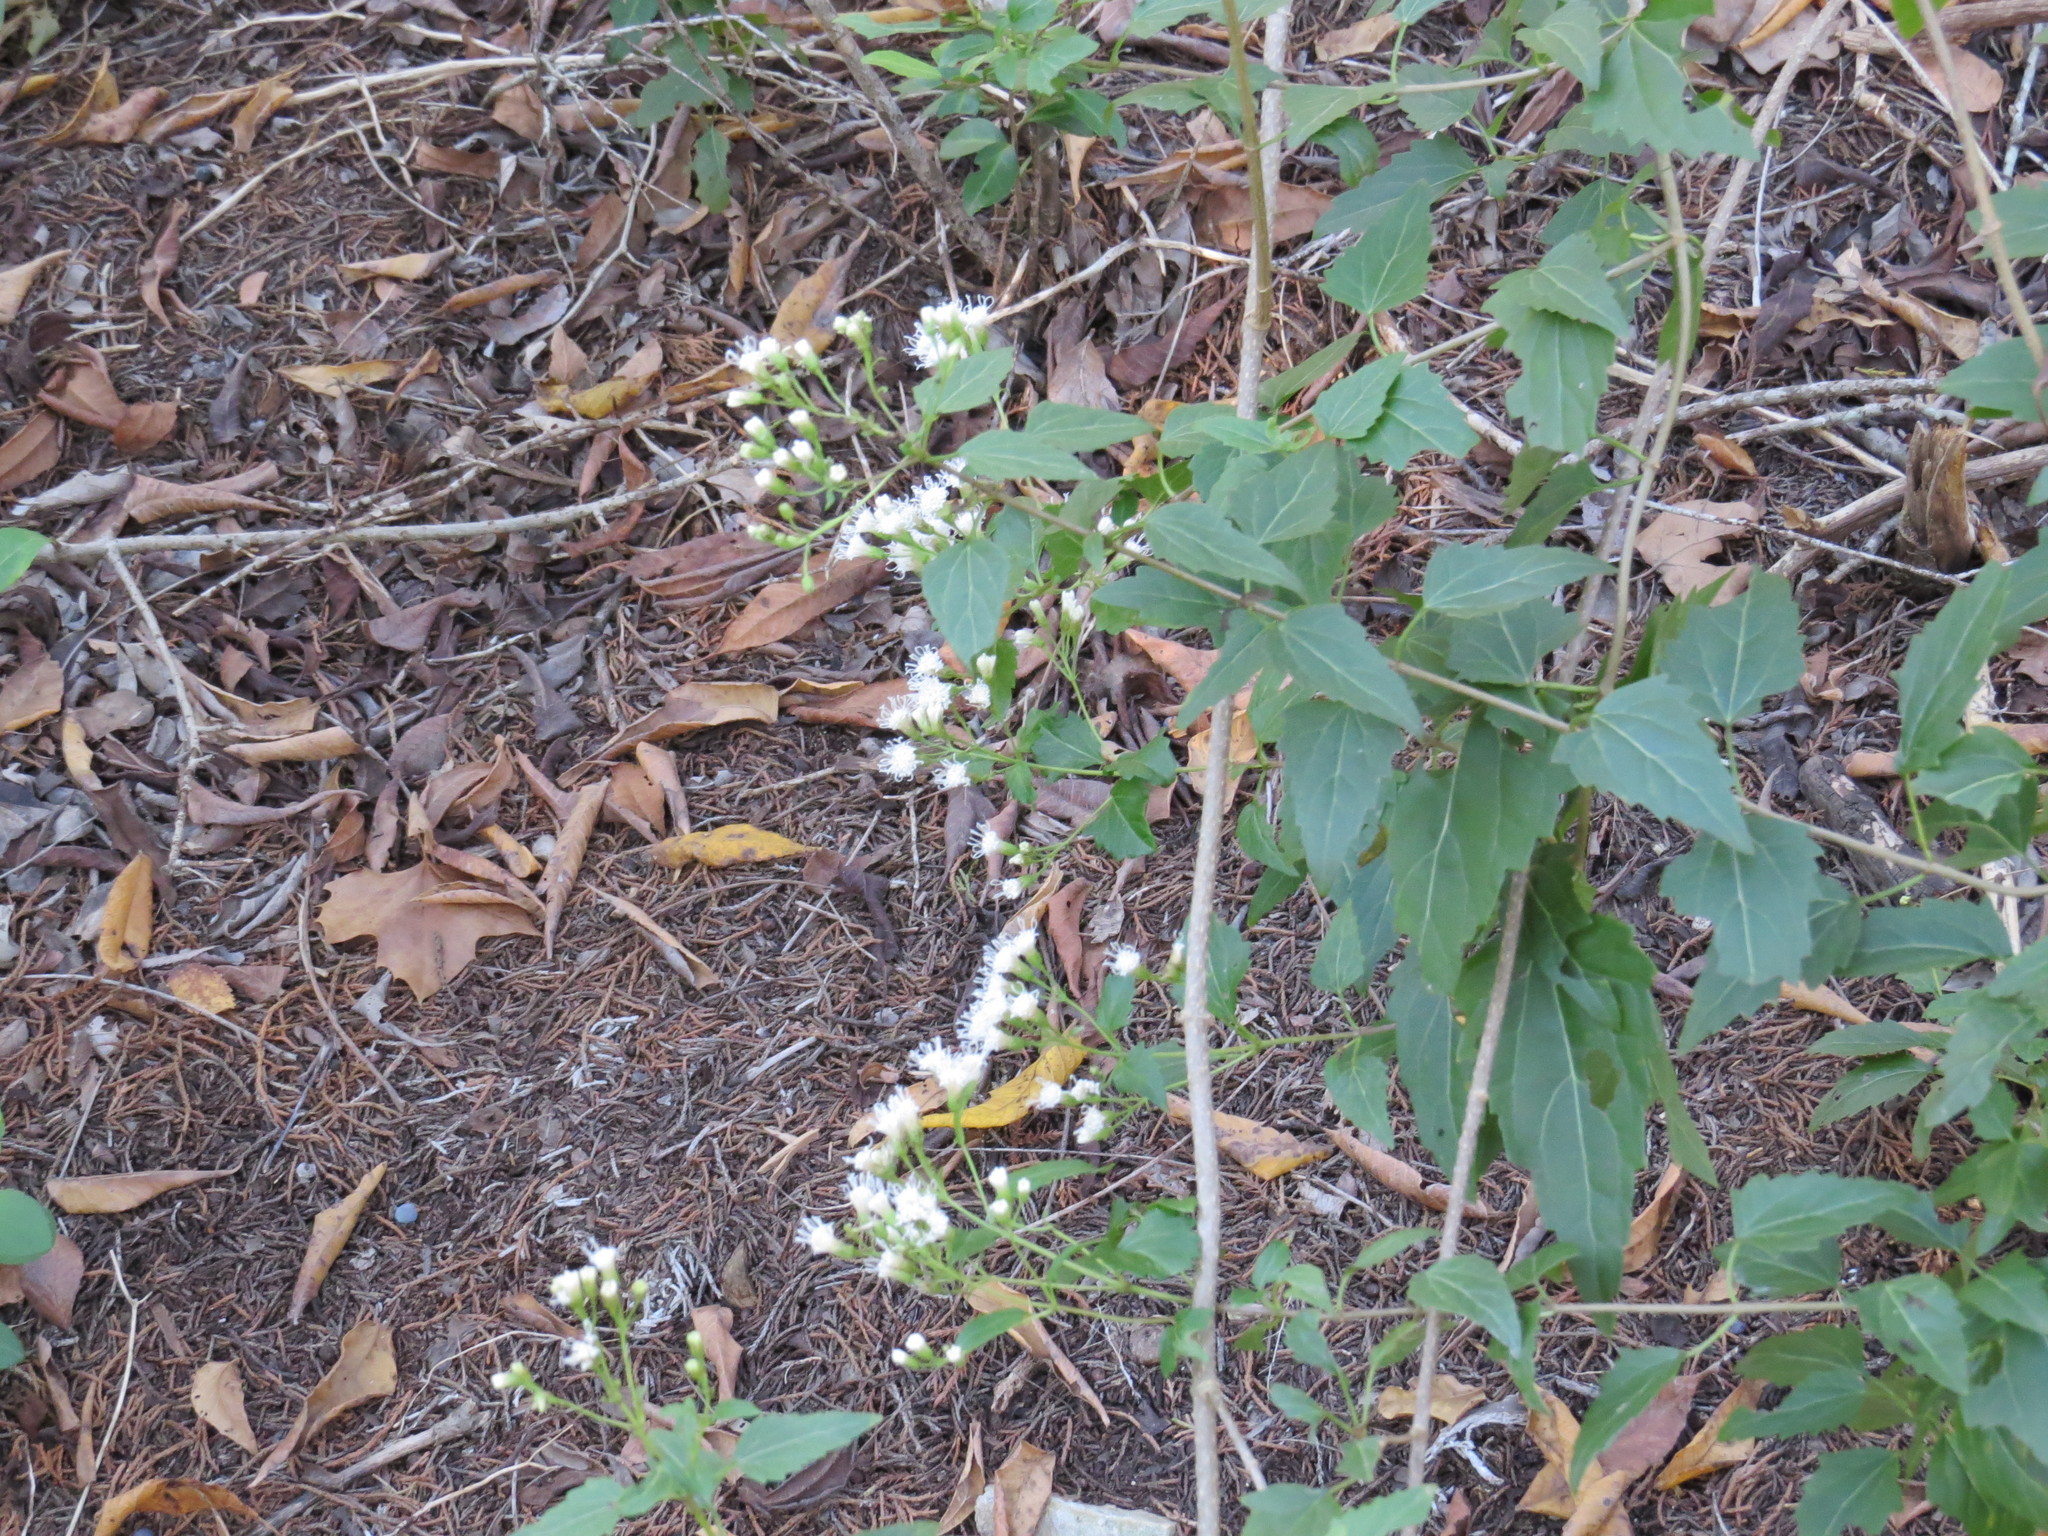 Image of <i>Ageratina havanensis</i>